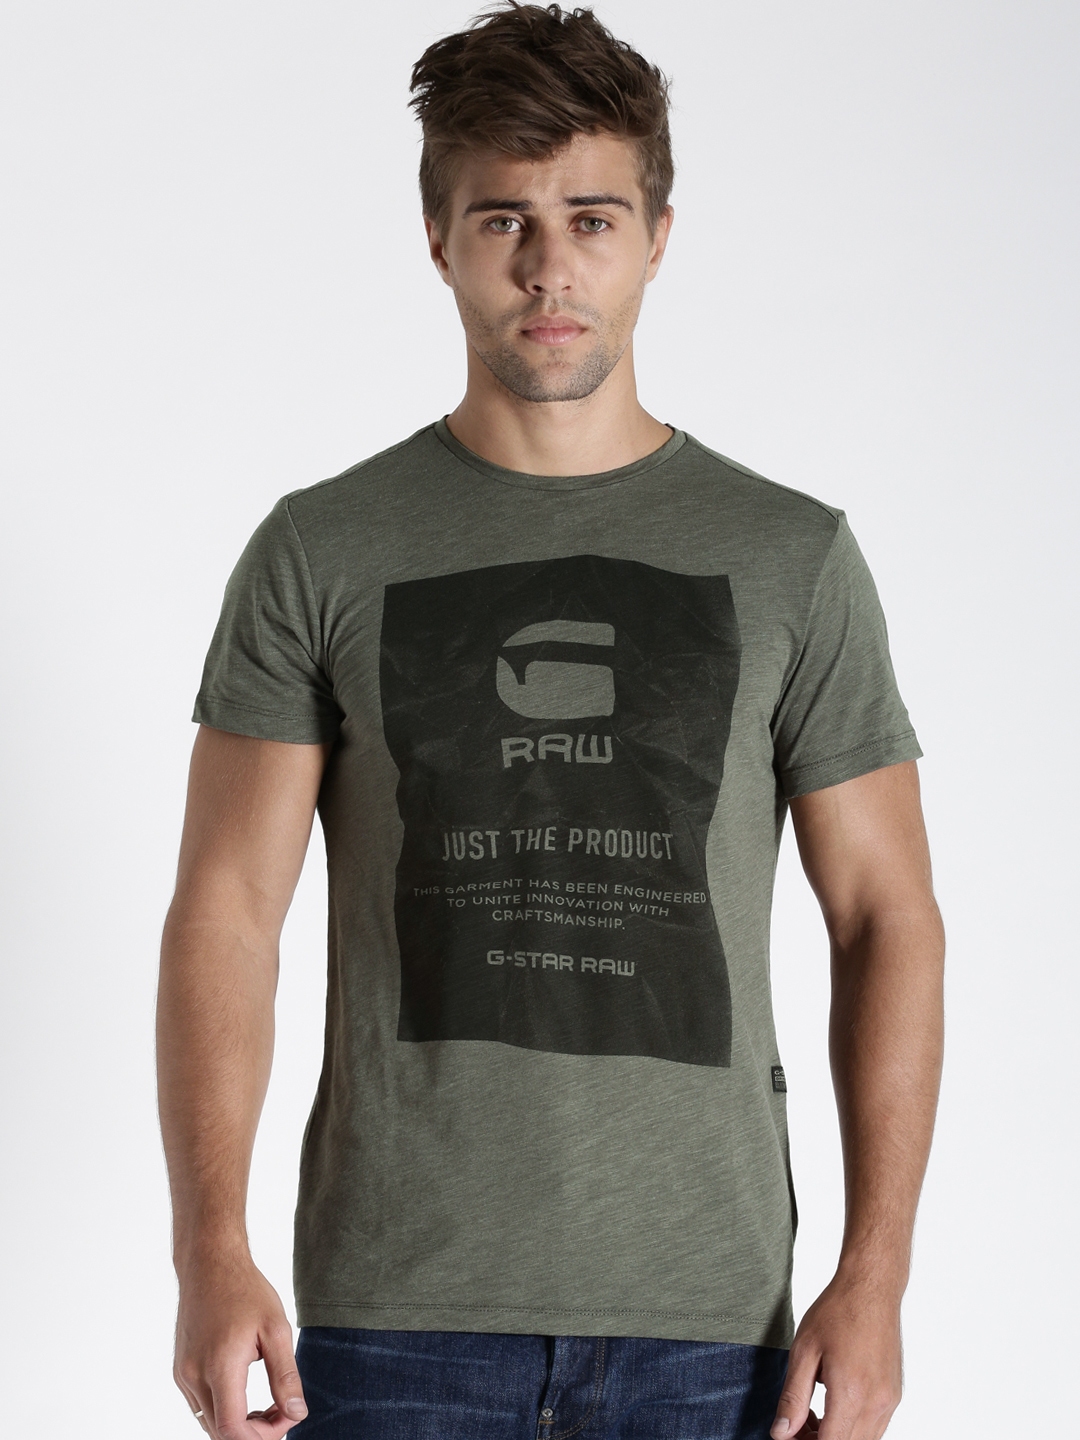 Buy G STAR RAW Olive Green Printed T Shirt - Tshirts for Men 1276673 ...